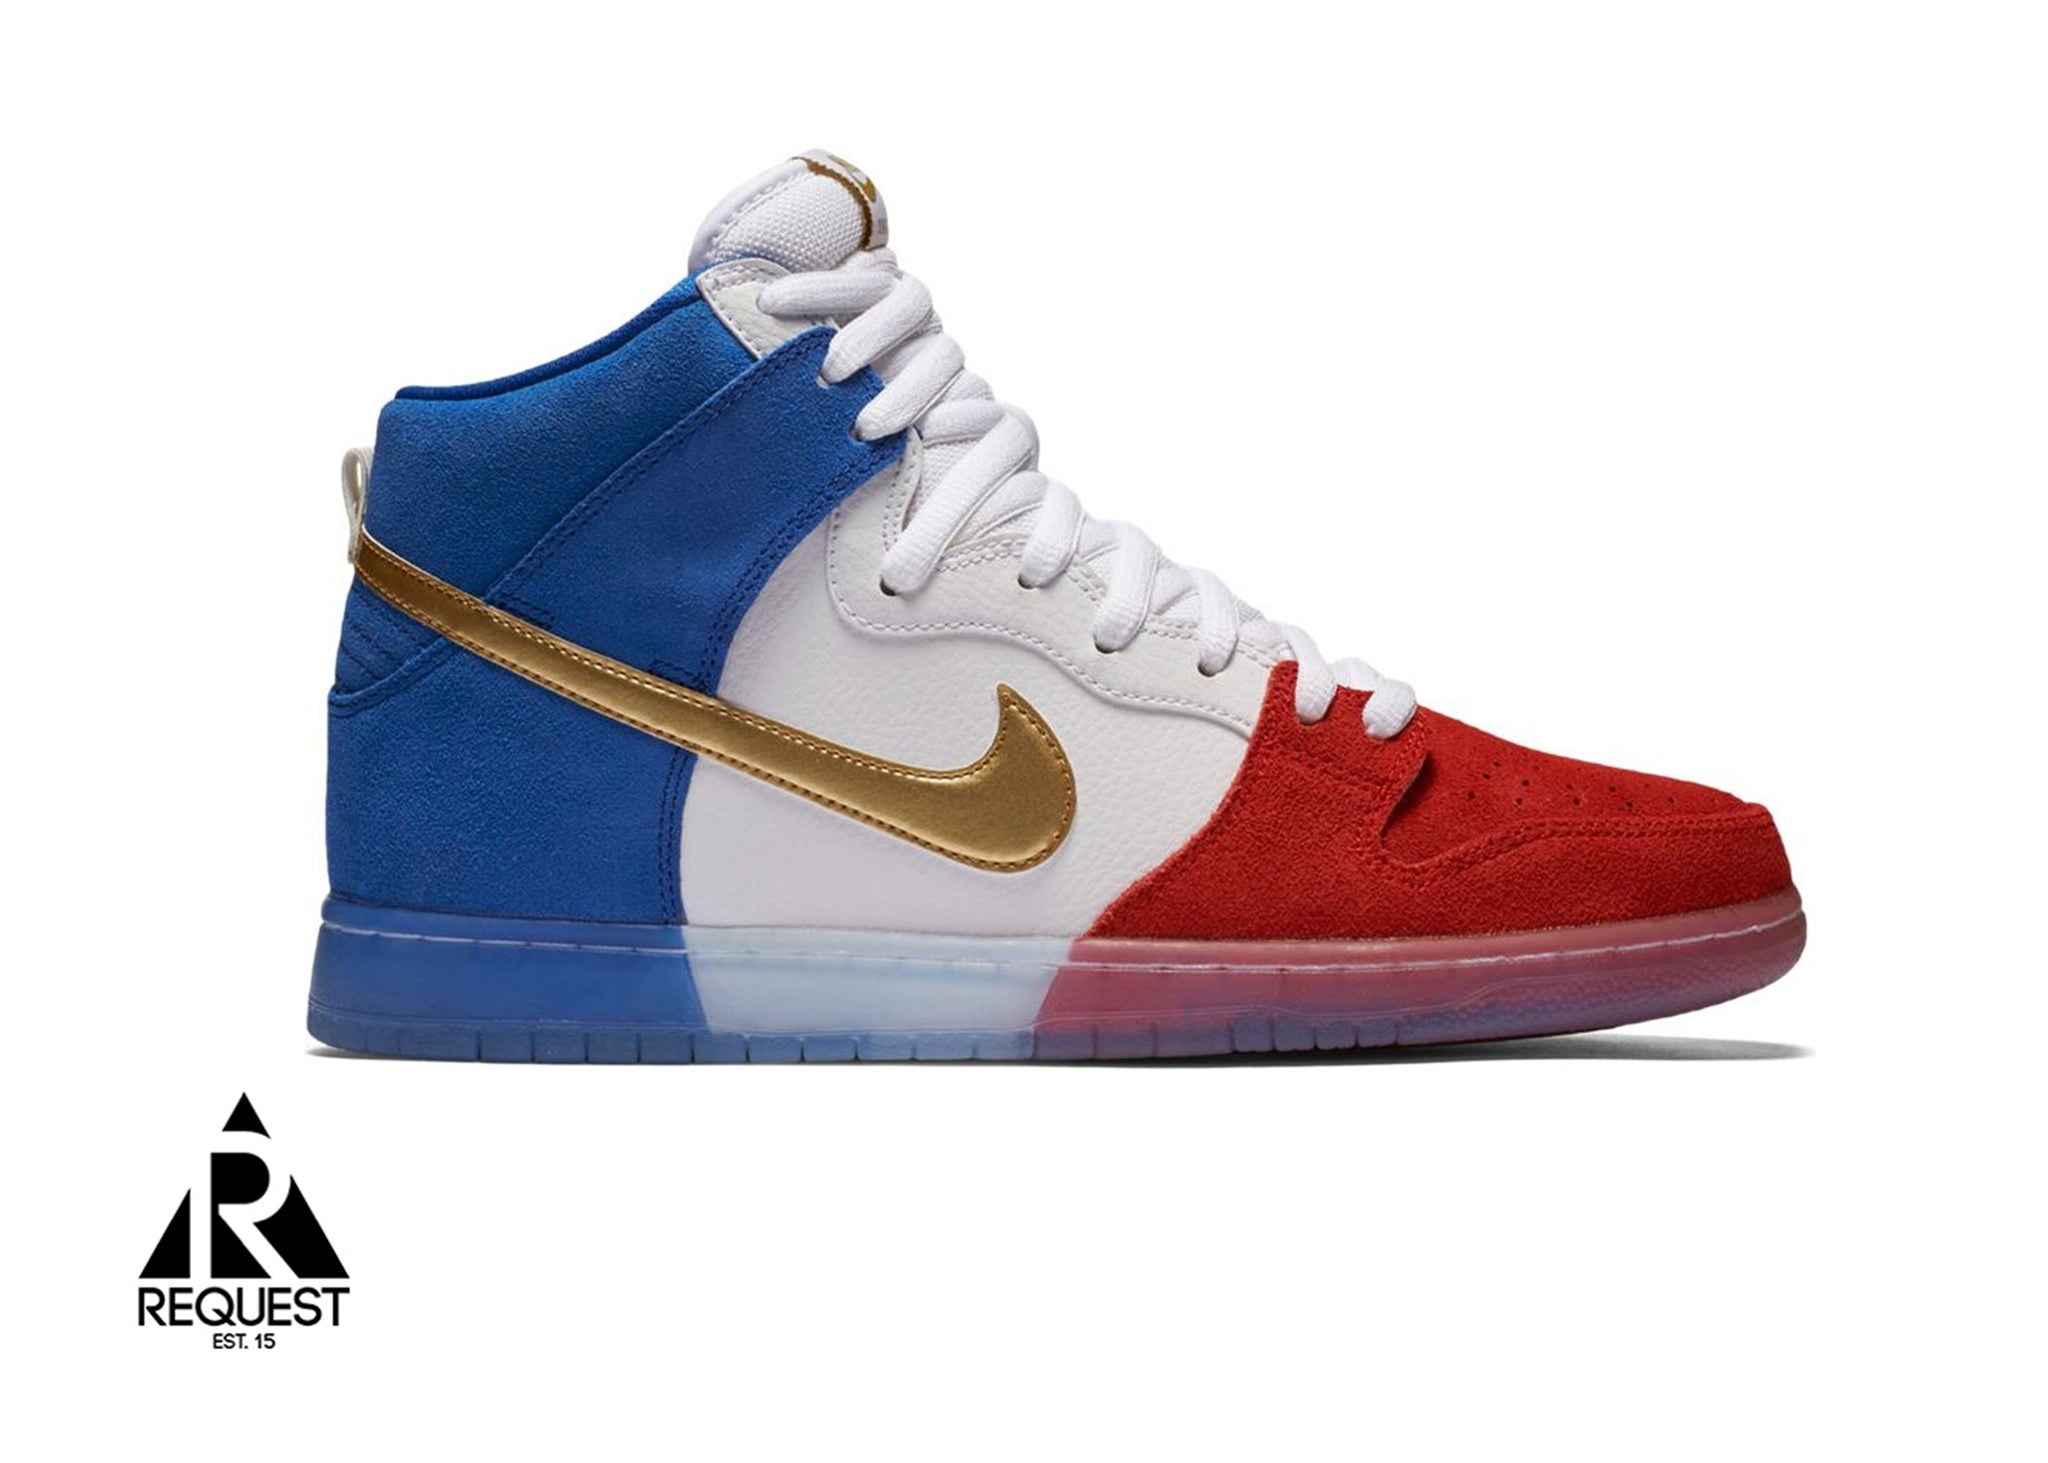 Nike SB Dunk High “Tri-color USA” | Request